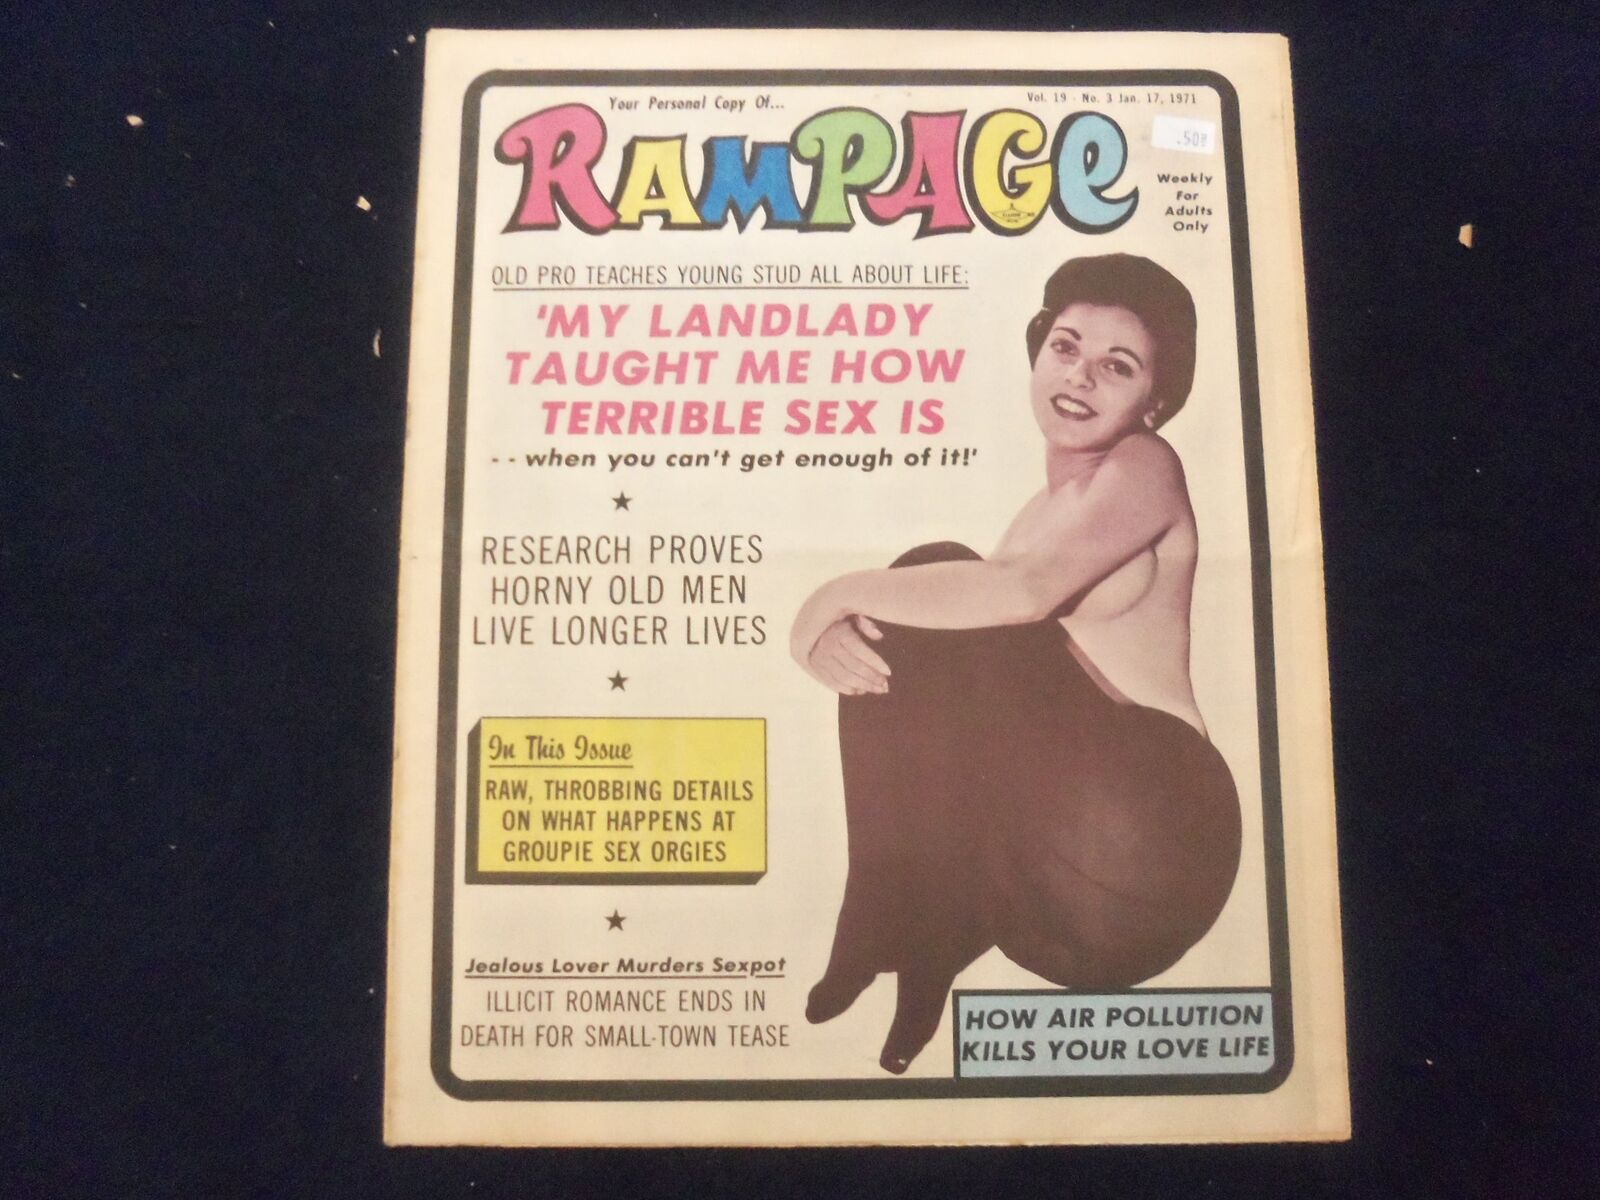 1971 JAN 17 RAMPAGE NEWSPAPER - LANDLADY TAUGHT ME HOW TERRIBLE SEX IS - NP 7292